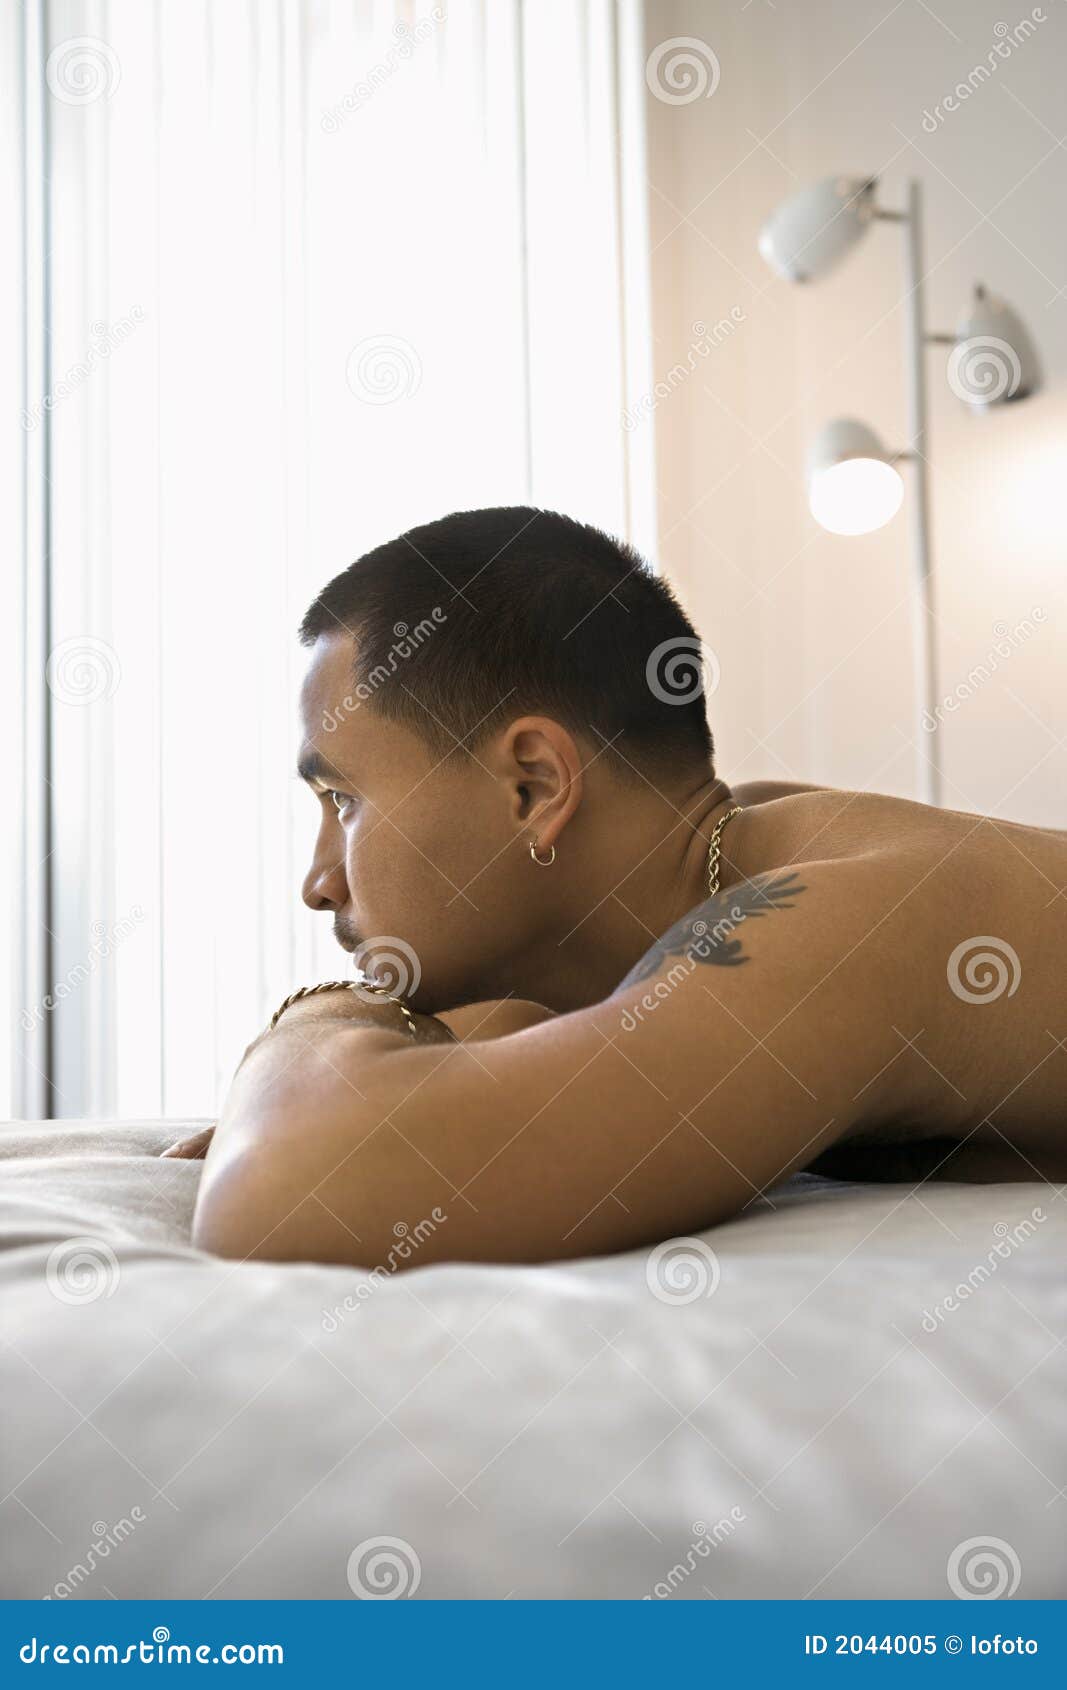 Portrait Of Shirtless Man Lying On Bed. Stock Image - Image: 2044005